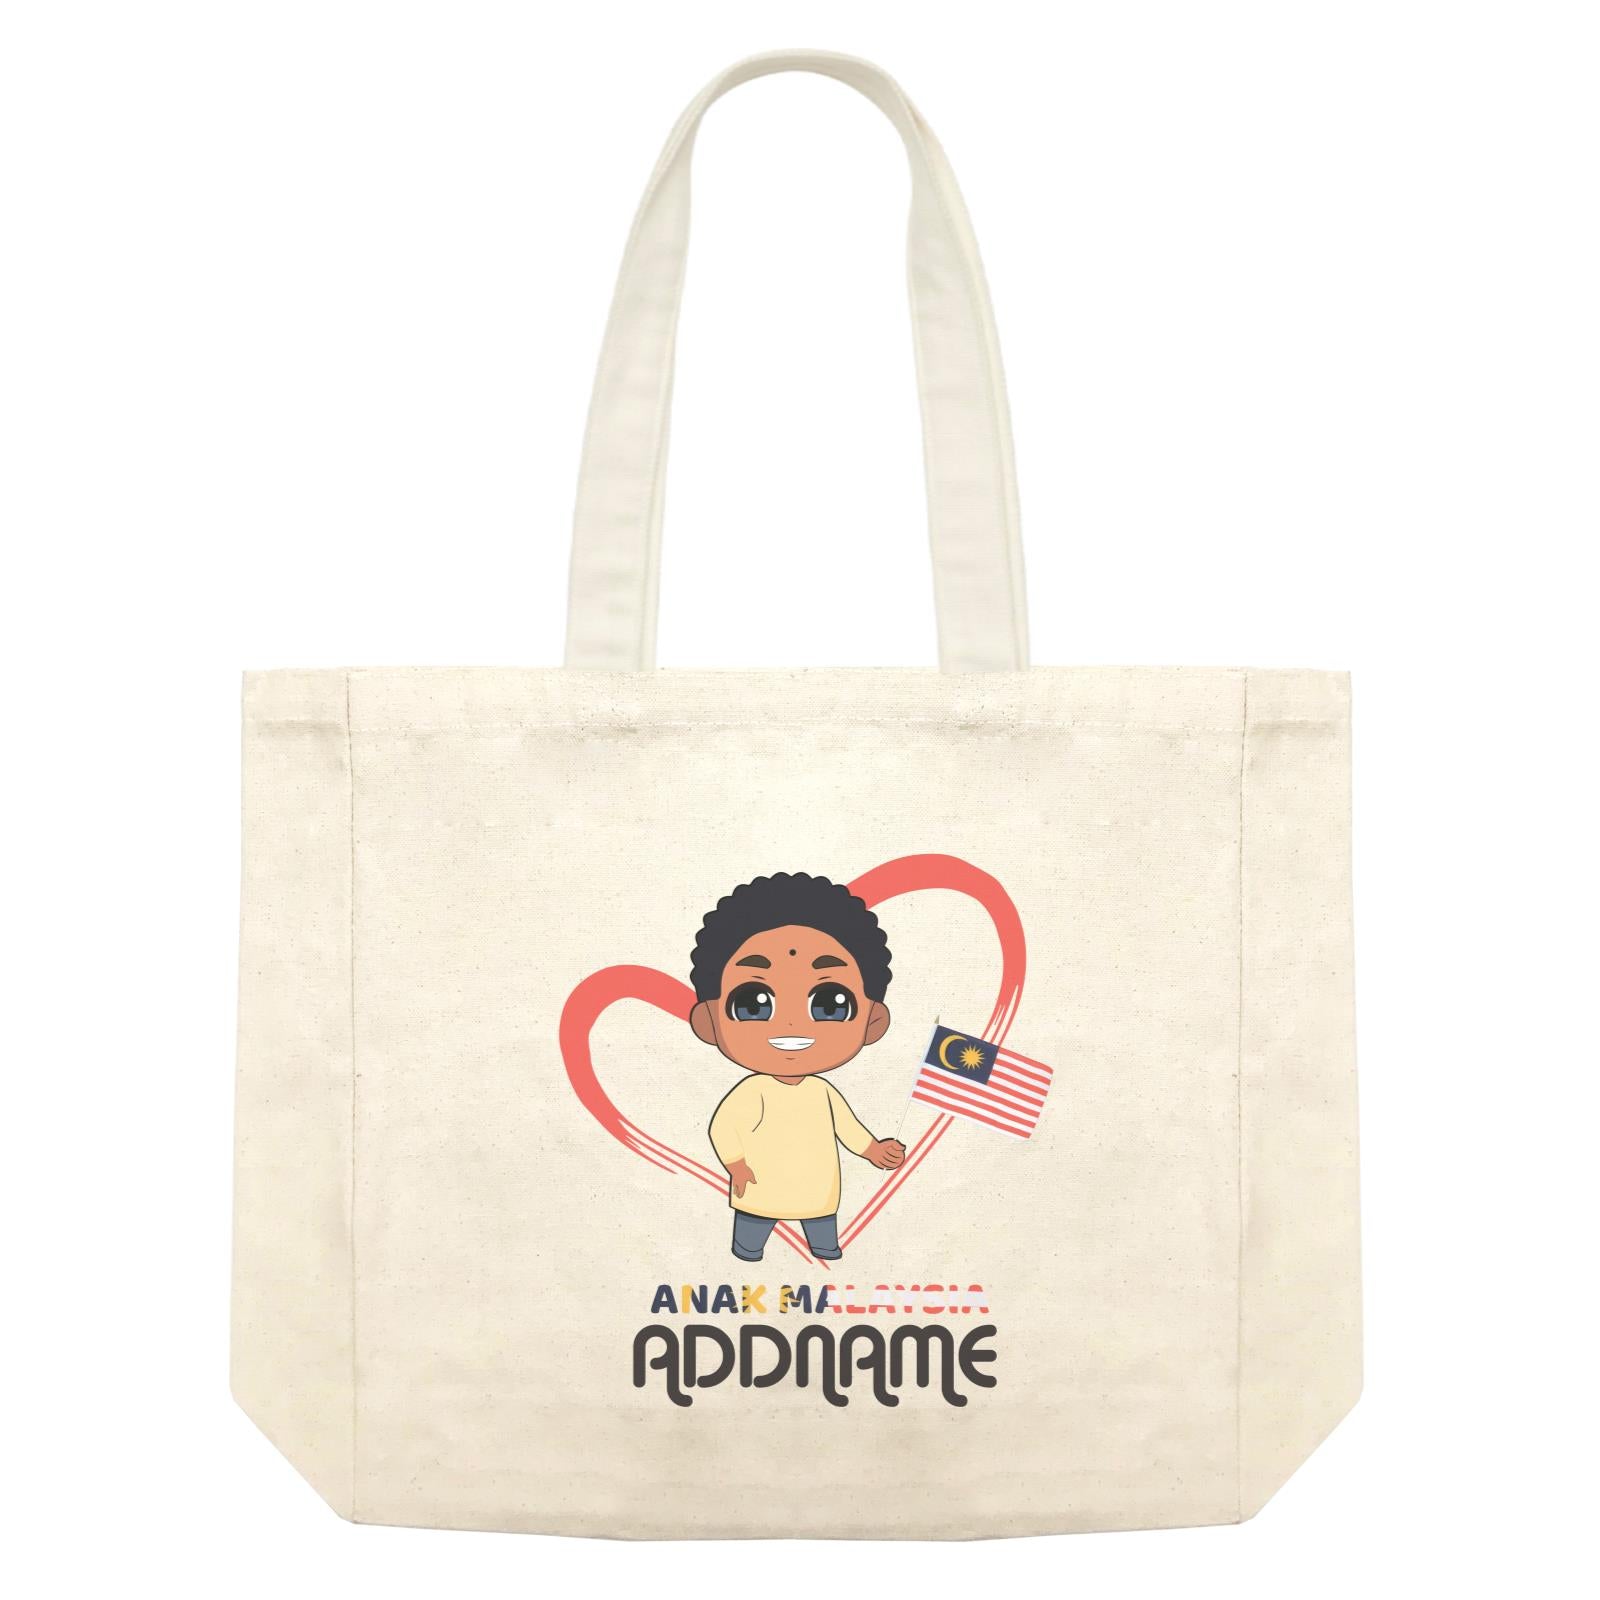 Merdeka Series Anak Malaysia Love Indian Boy Addname Shopping Bag